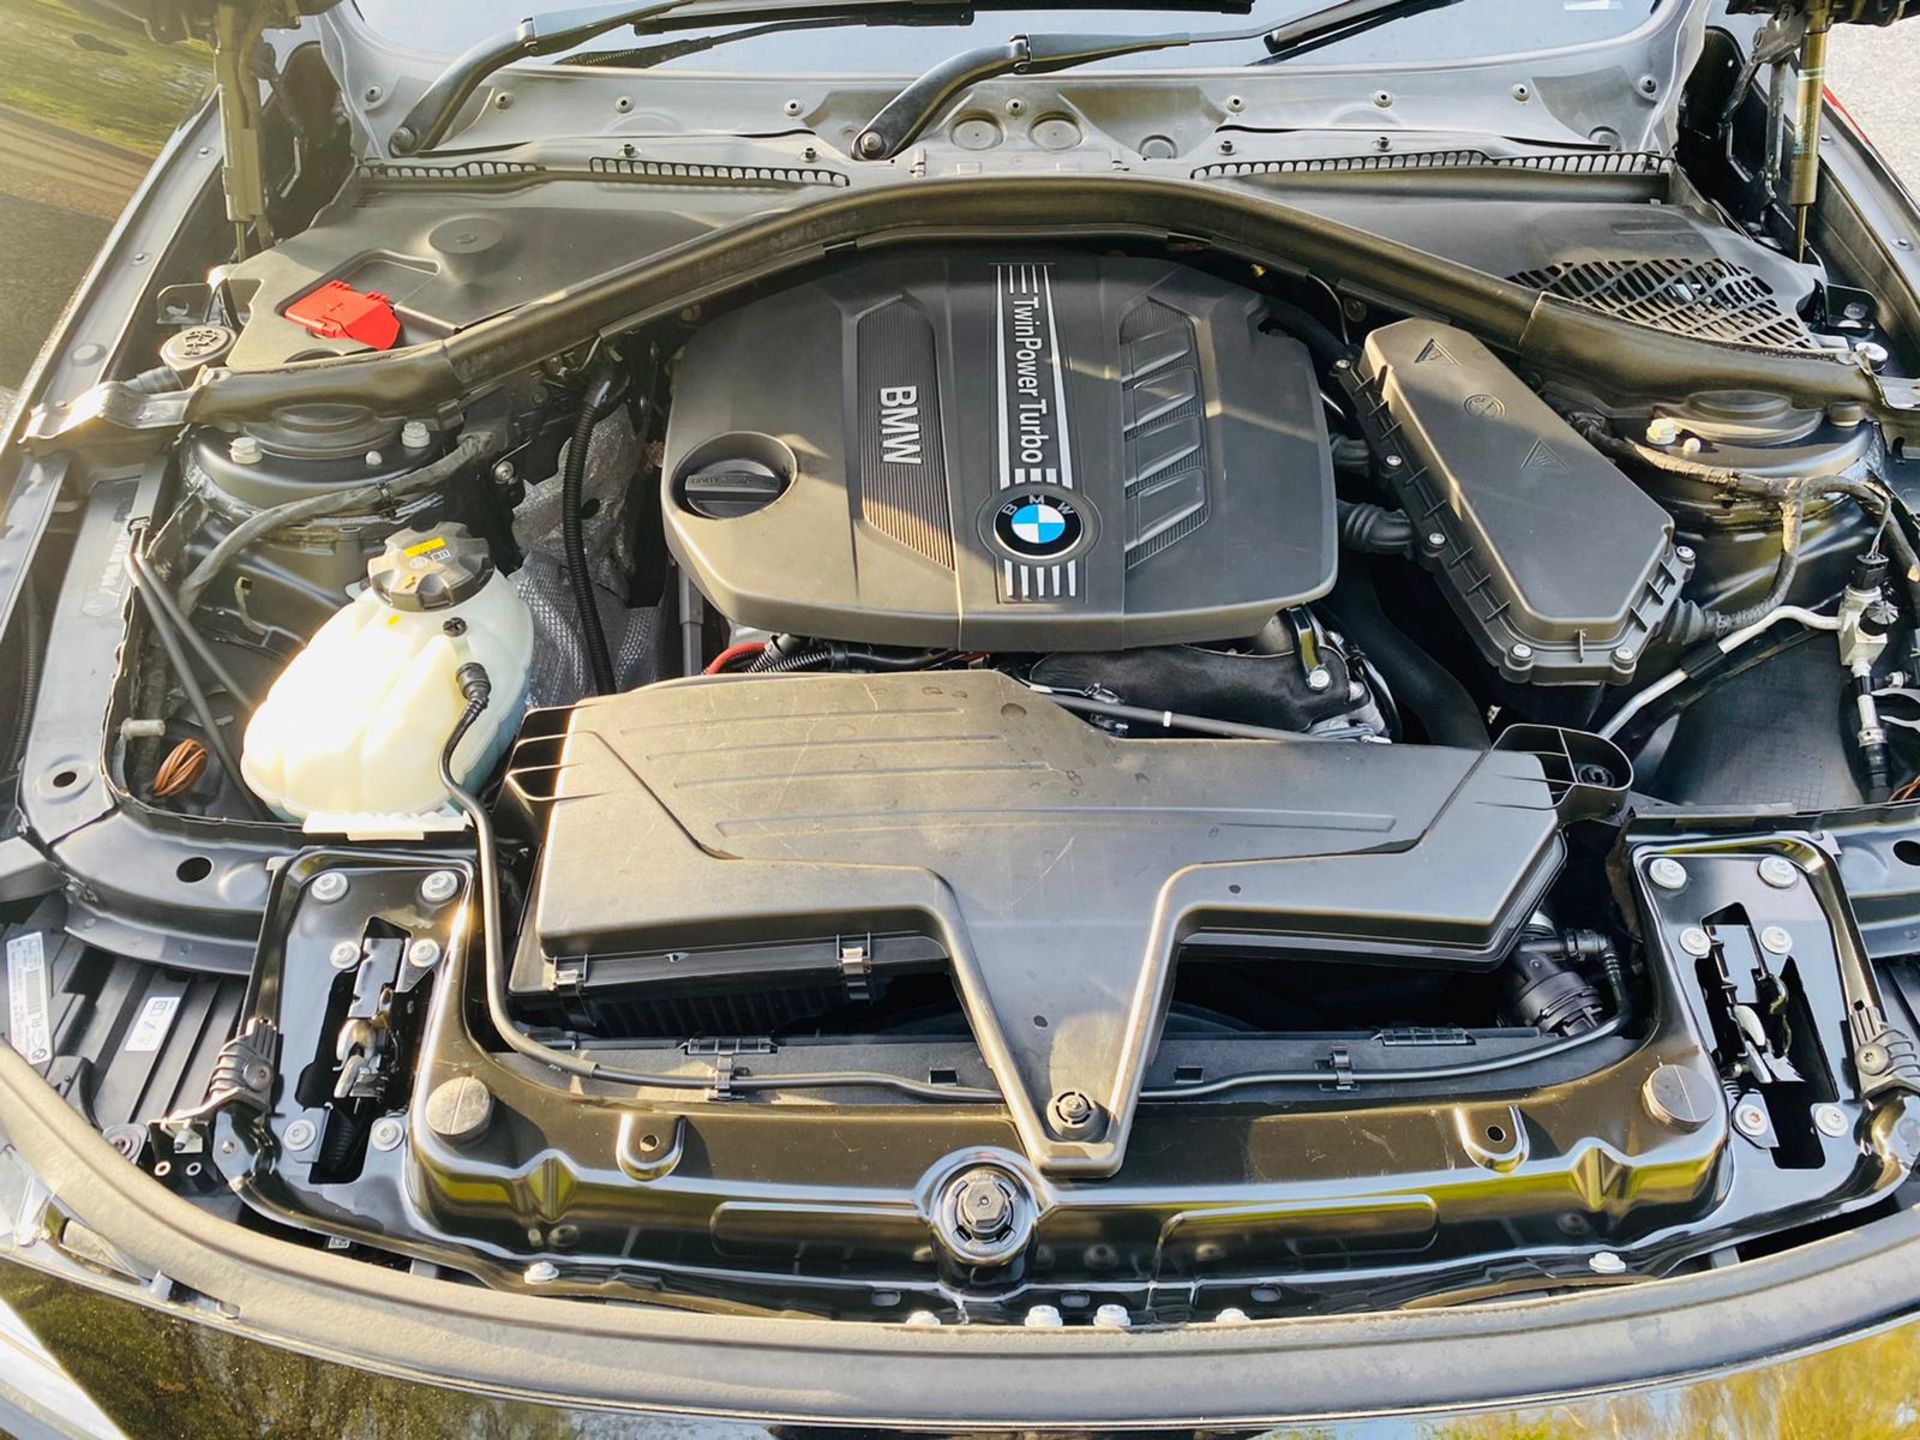 2014 BMW 320D BUSINESS EFFICIENTDYNAMICS, 4 DOOR SALOON, 2.0 DIESEL ENGINE, FULL SERVICE *NO VAT* - Image 10 of 10